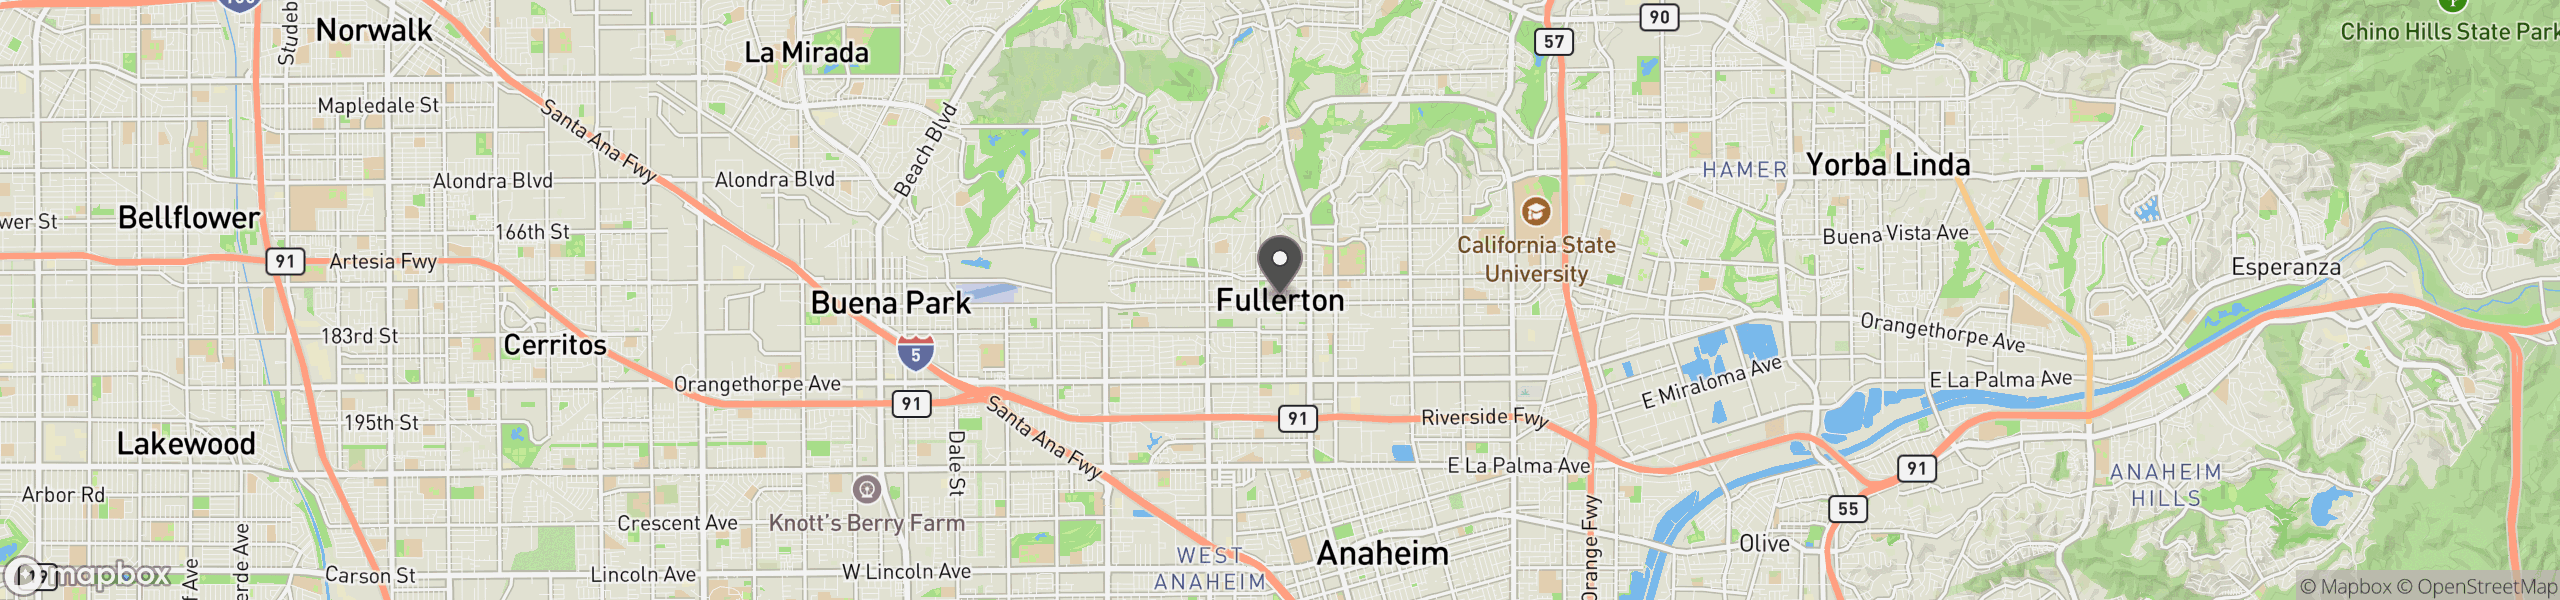 Fullerton, CA